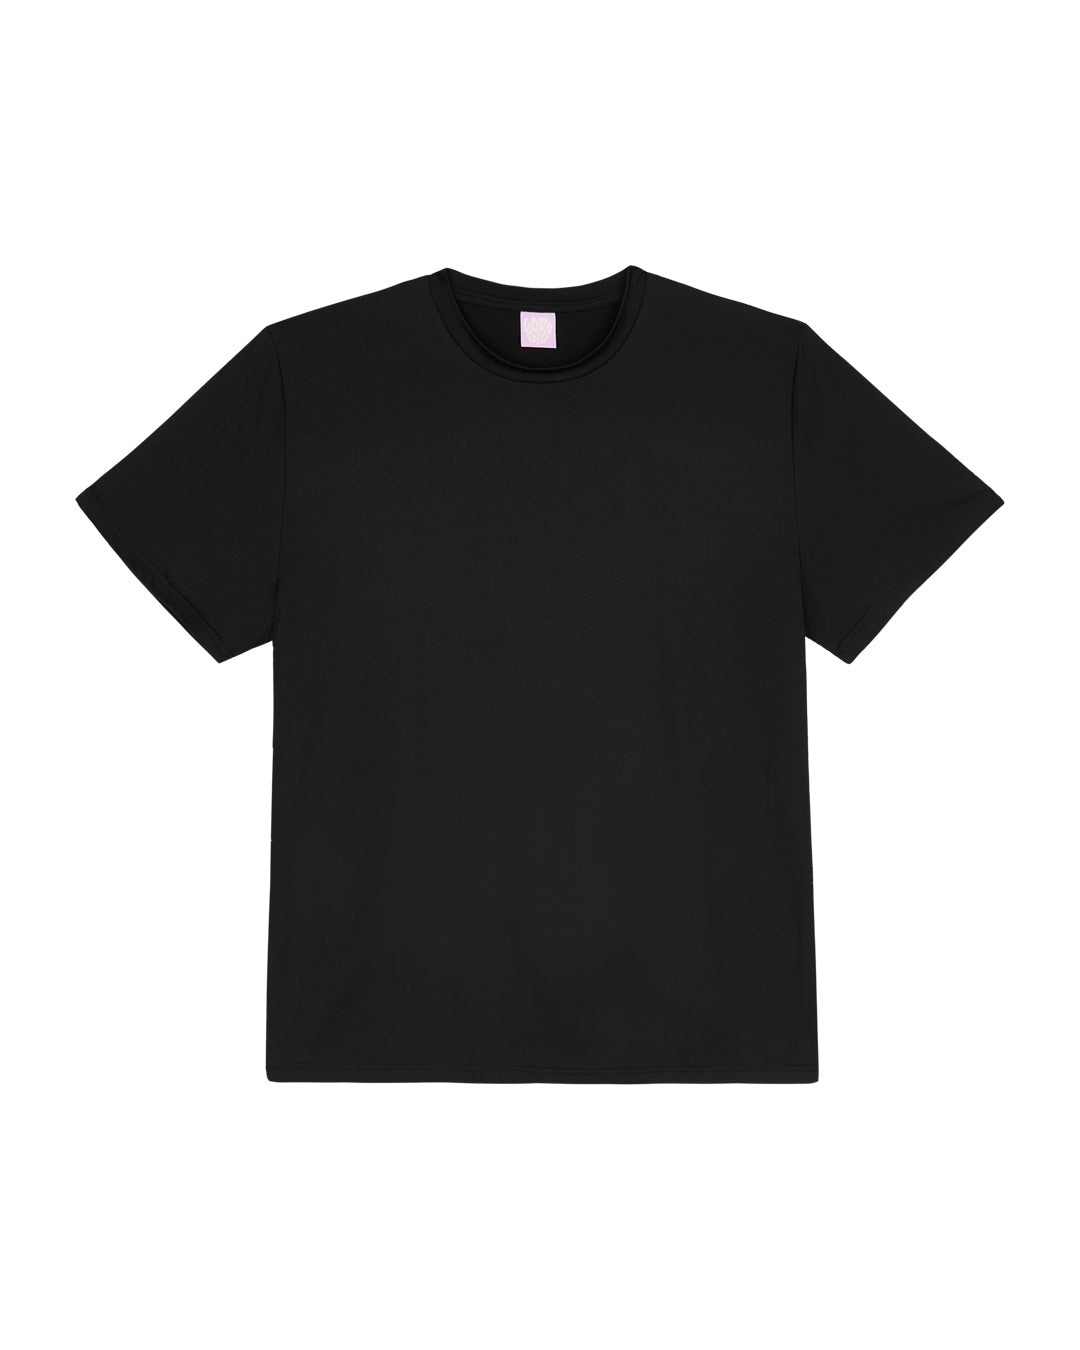 Cuddlelicious / Cropped T-Shirt / Black